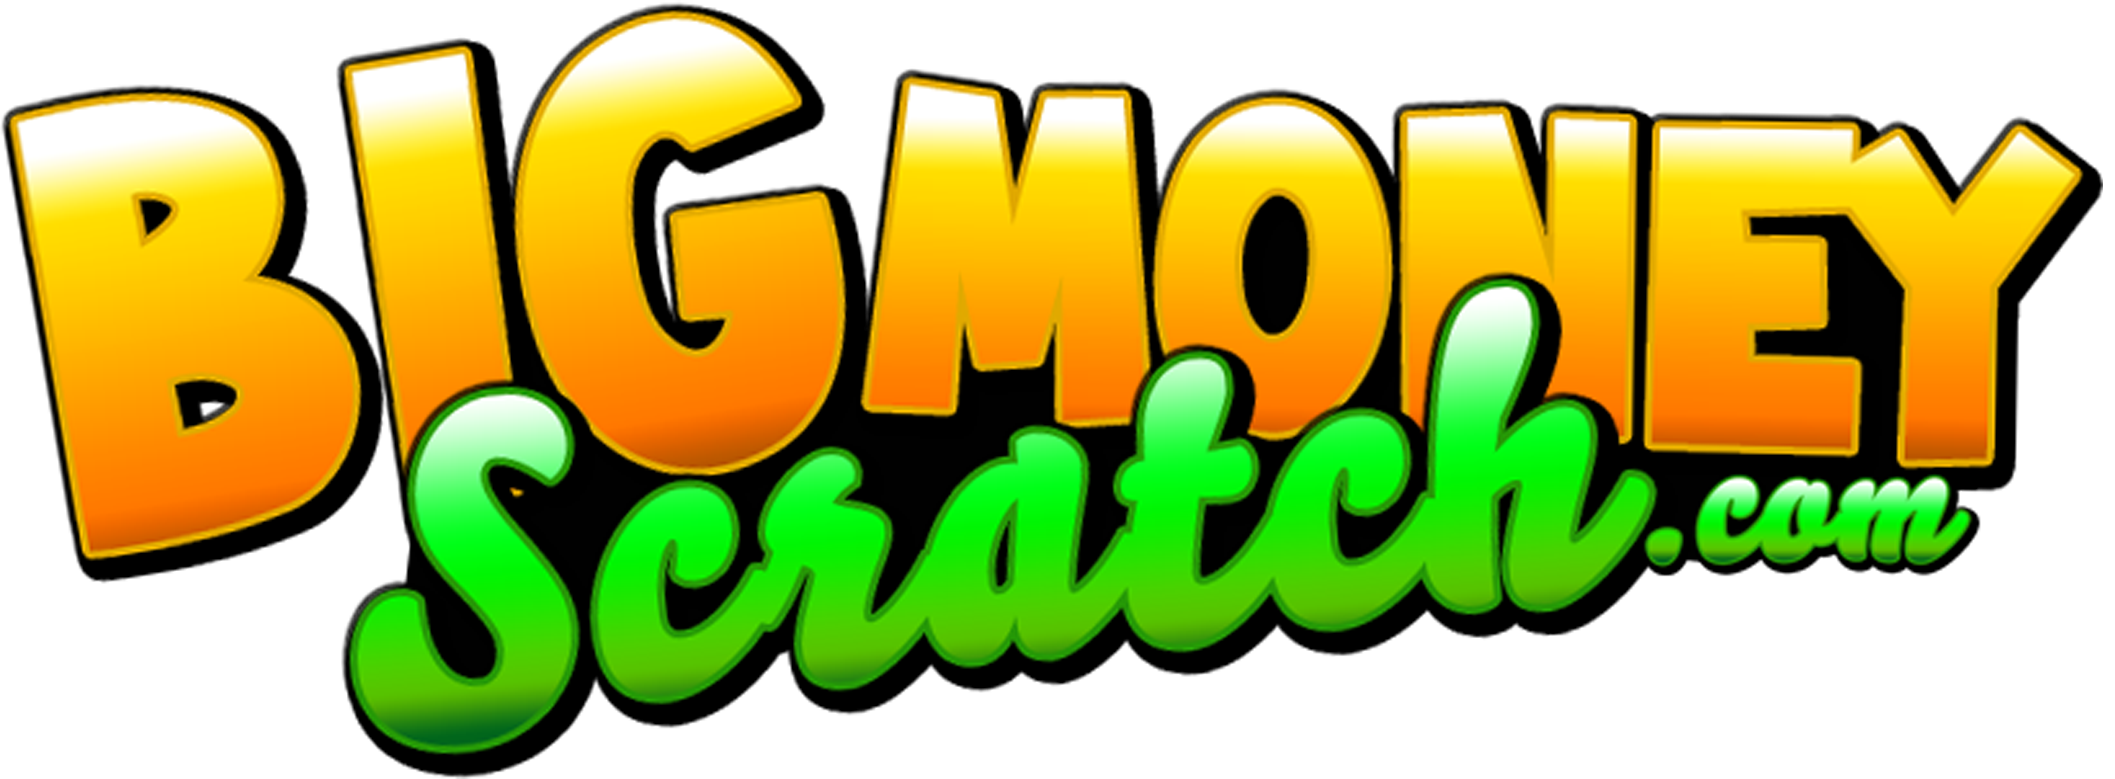 bigmoneyscratch logo